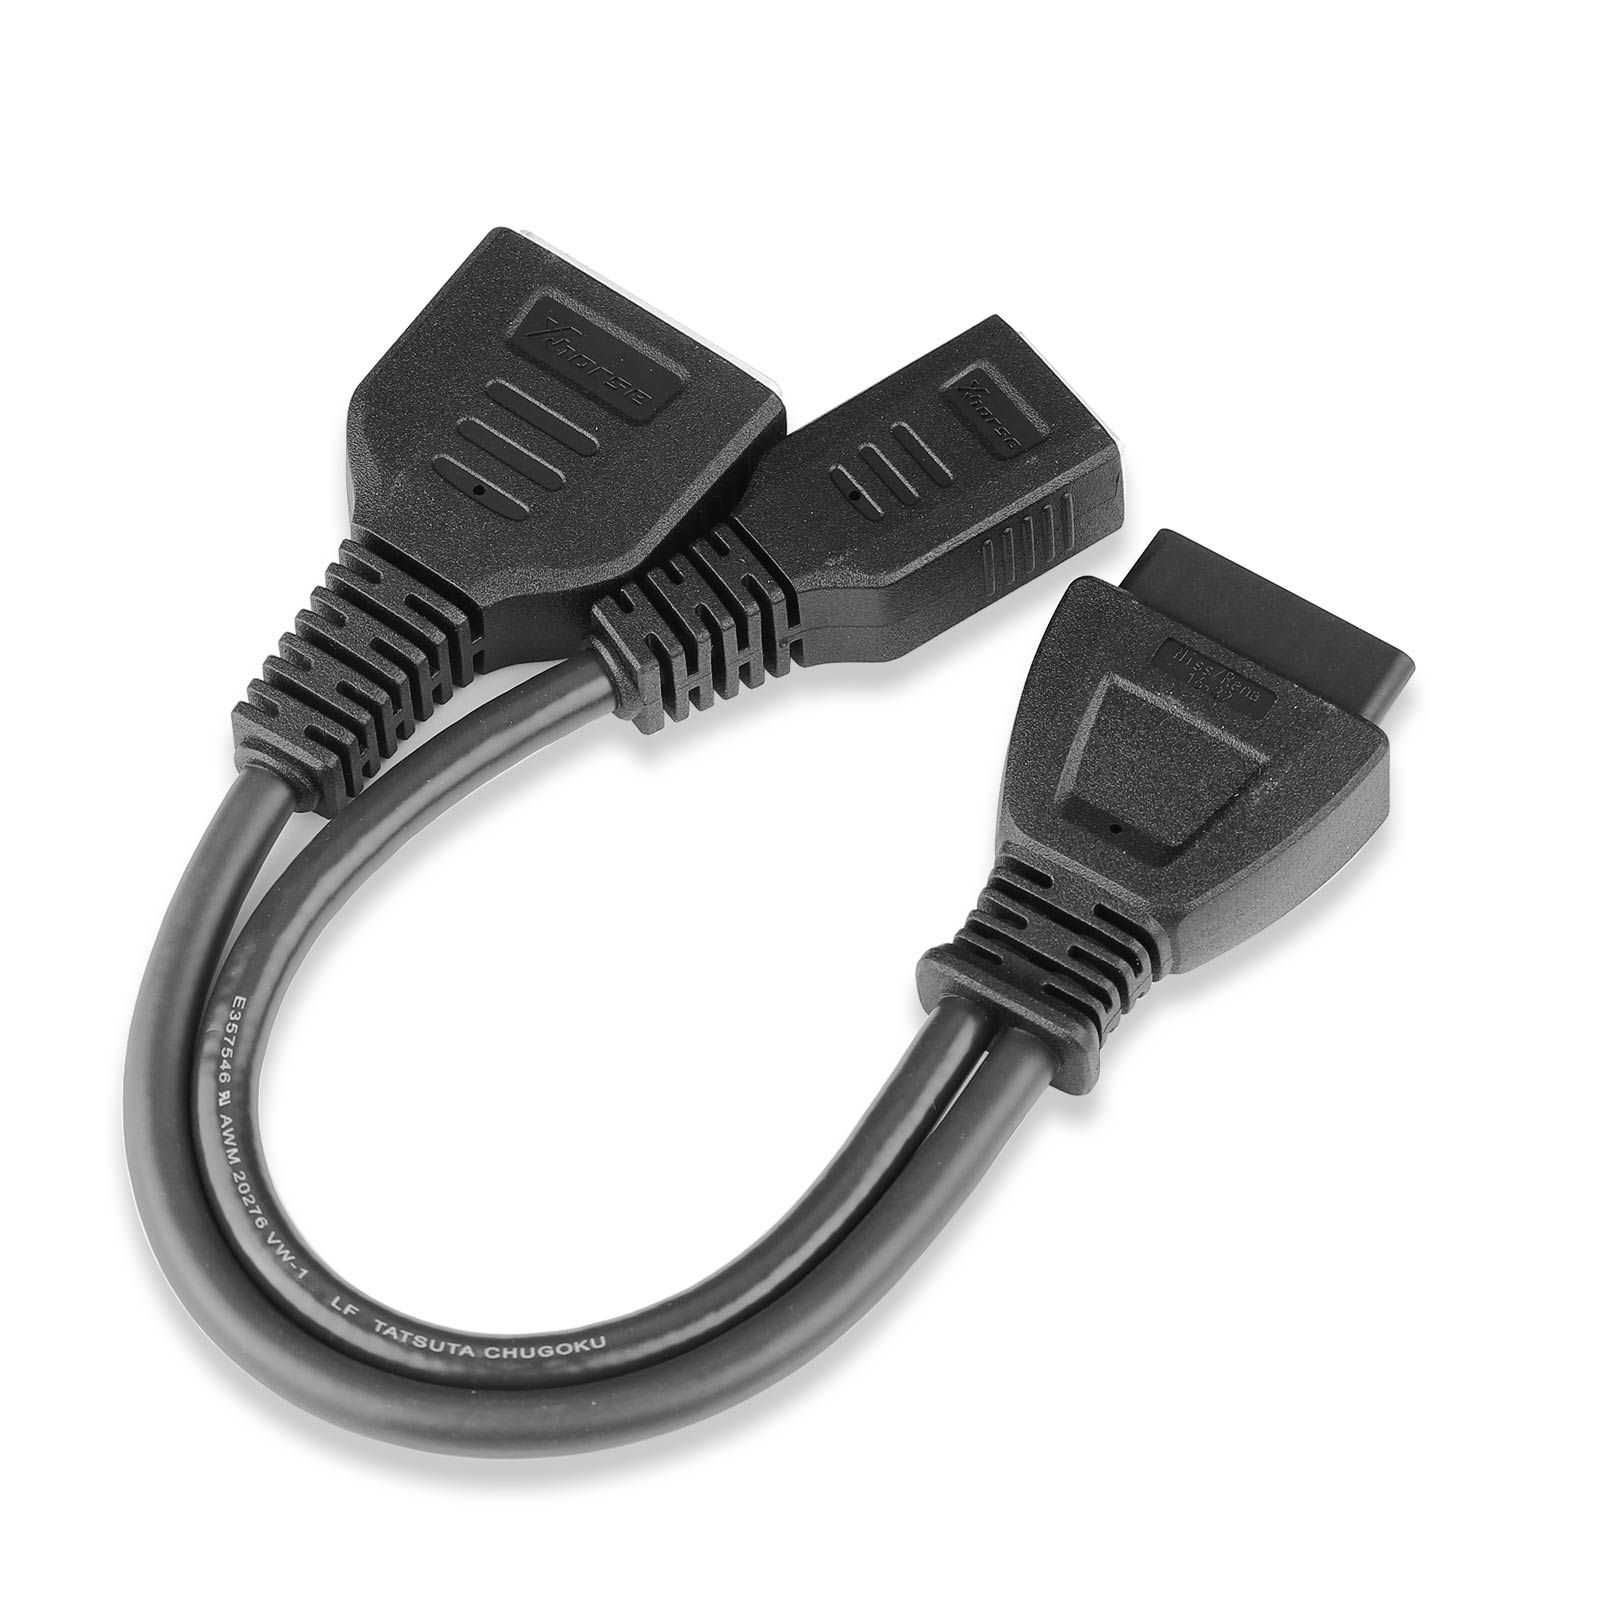 Xhorse xdkp36gl Nissan 16 + 32 cable Gateway Adapter para vvdi Key Tool plus